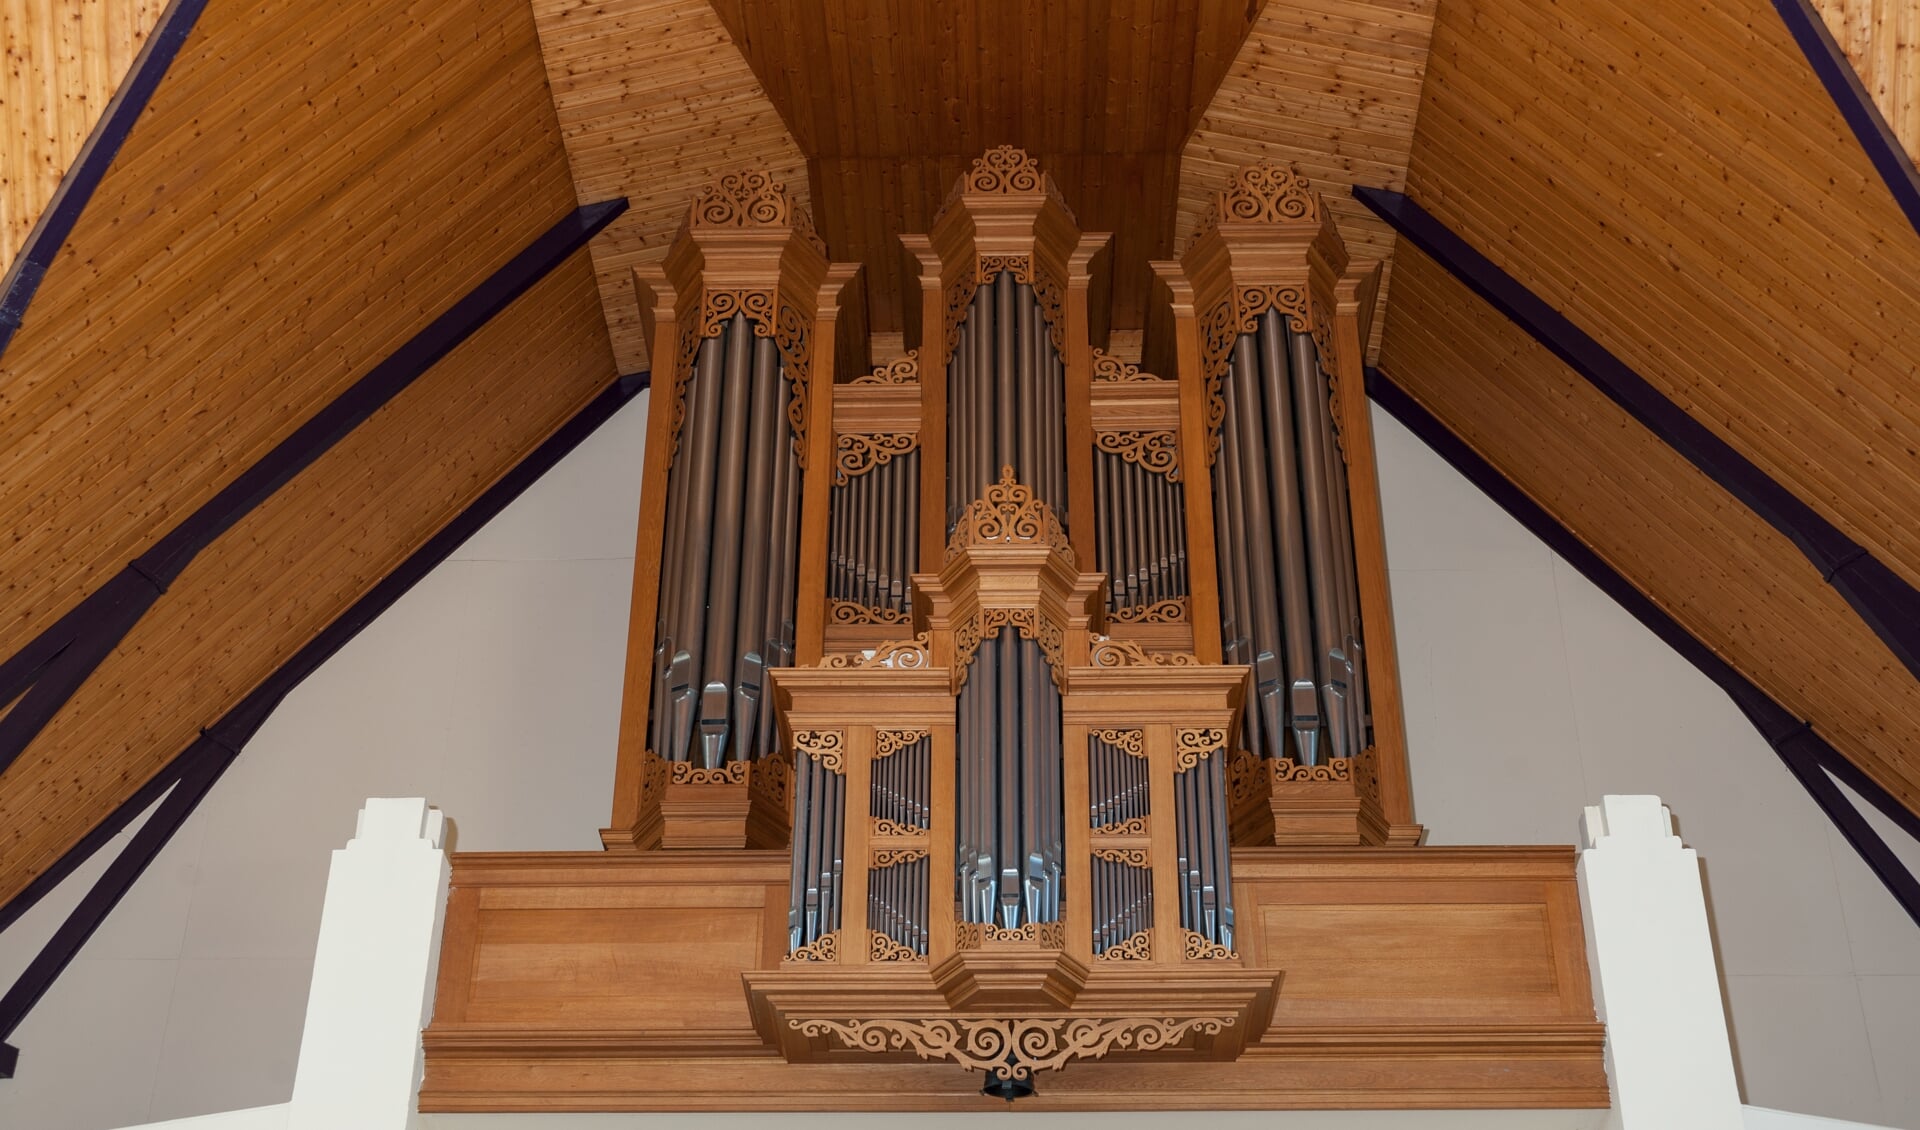 Het orgel in de Grote Kerk in Kollumerzwaag.